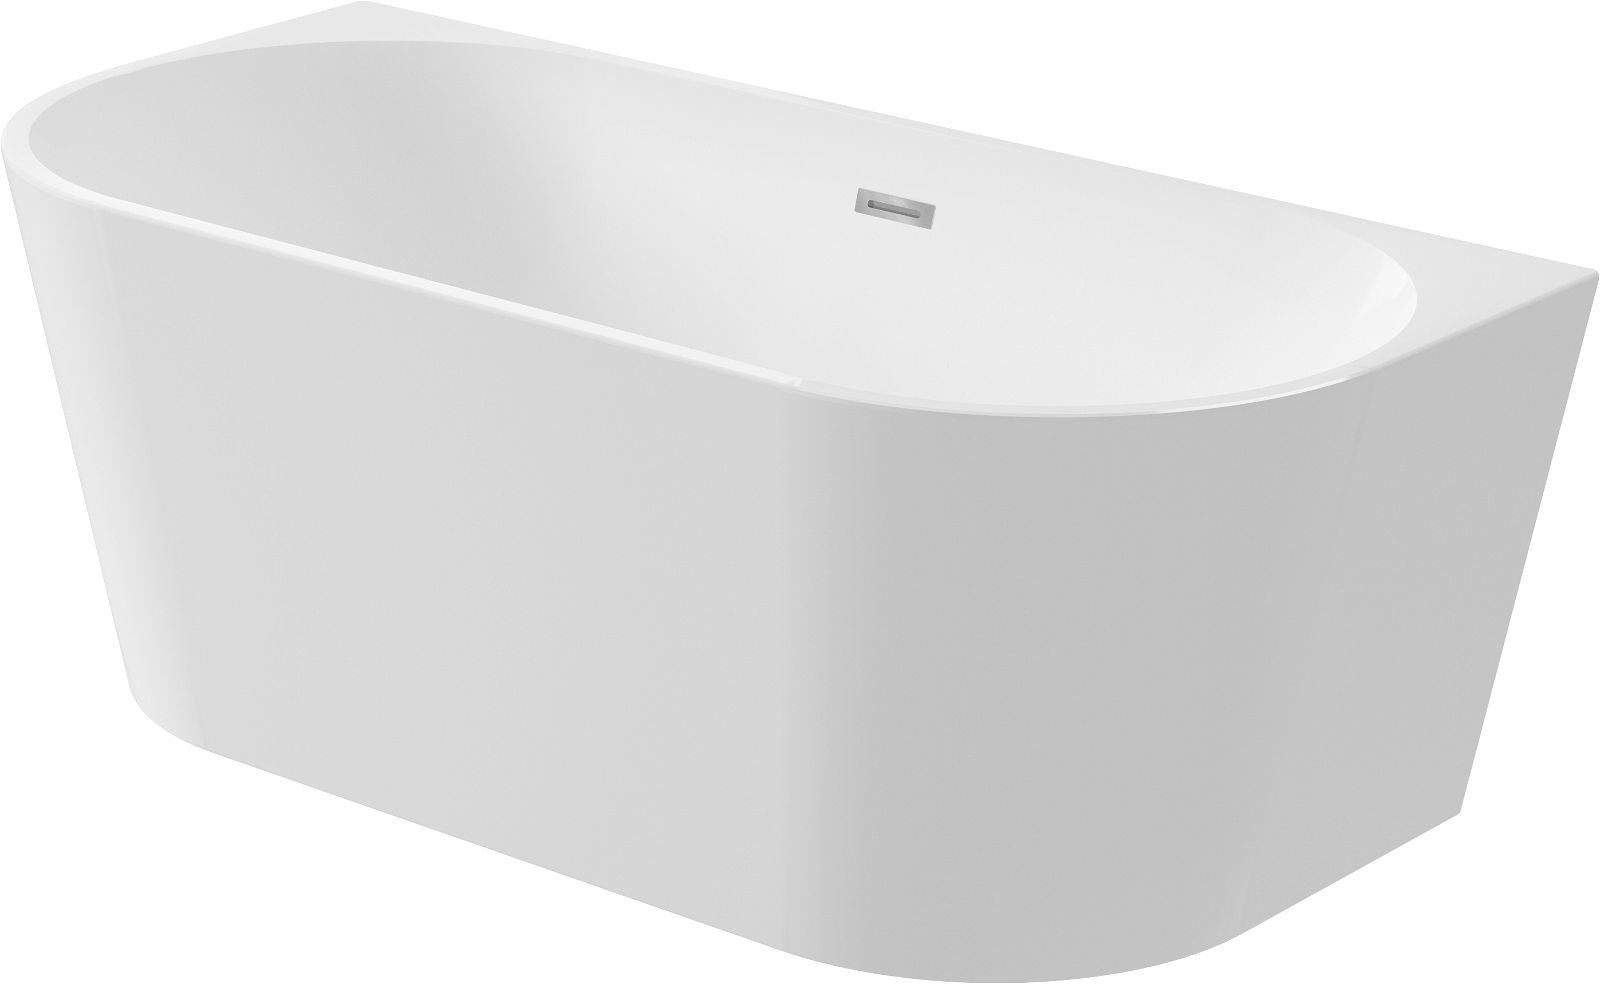 Акриловая ванна, пристенная/отдельно стоящая - 160 см - KDS_016W - Główne zdjęcie produktowe